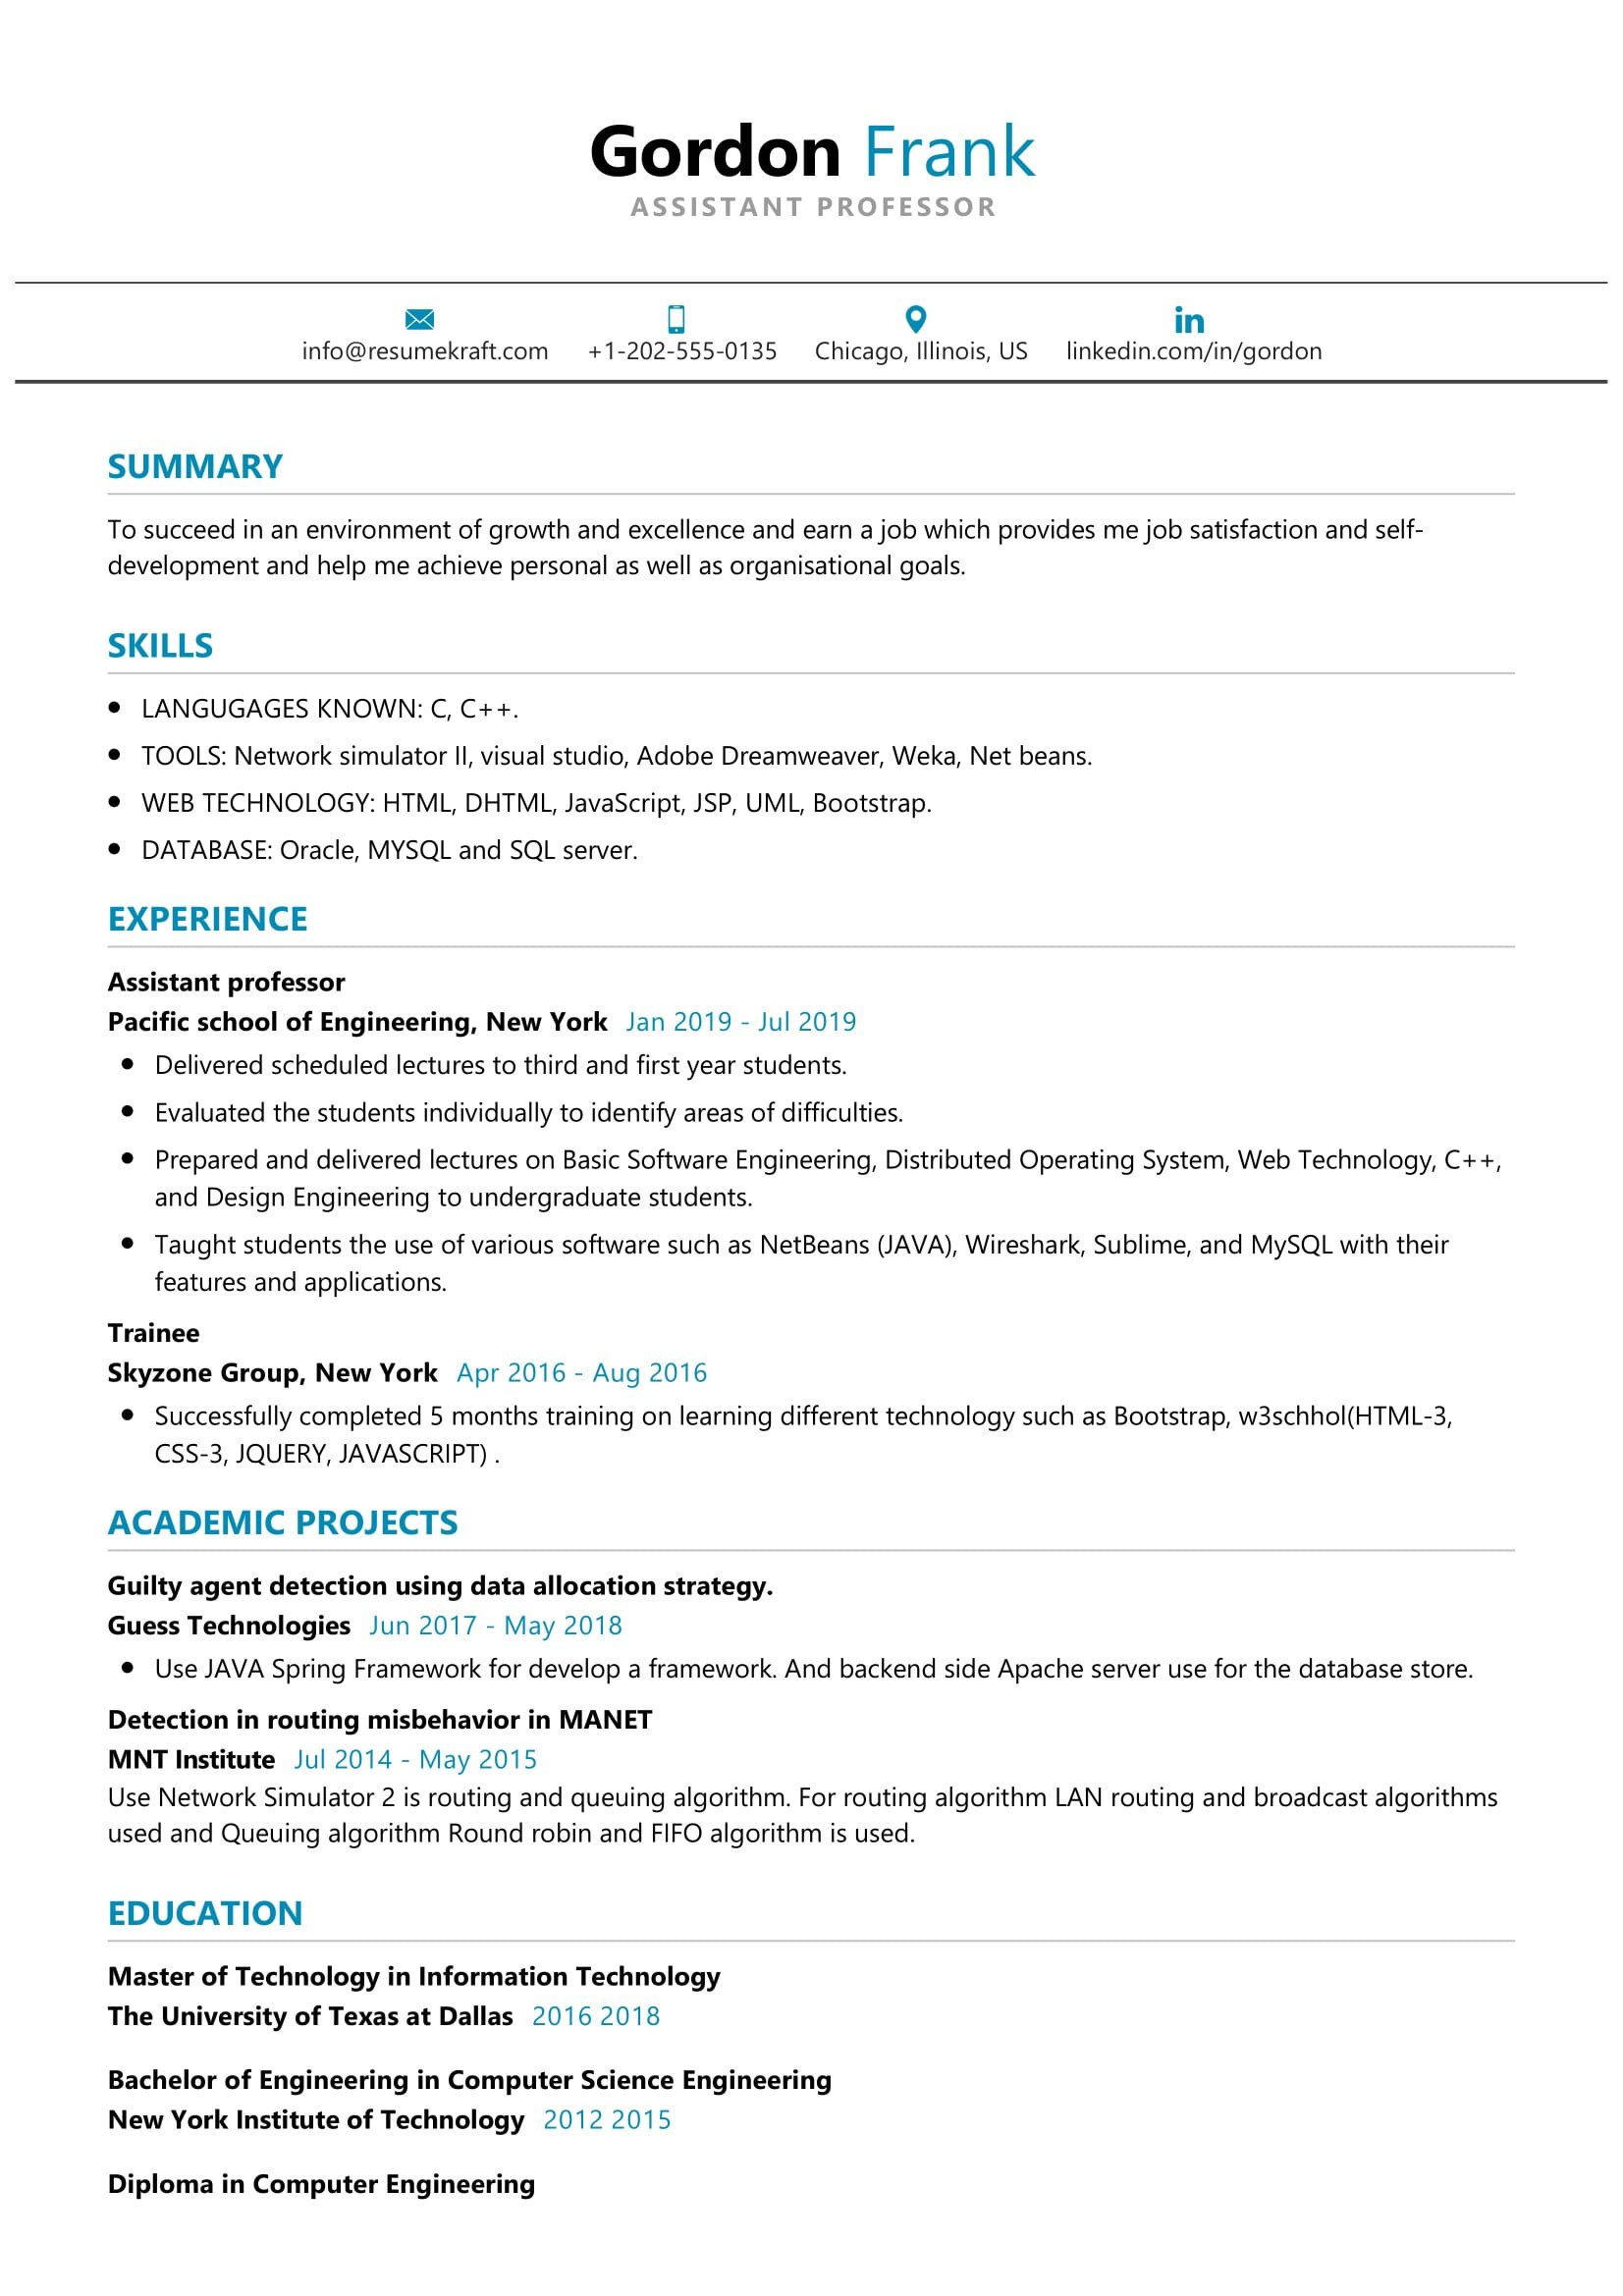 Sample Resume for Experienced assistant Professor In Engineering College assistant Professor Resume Sample Resumekraft